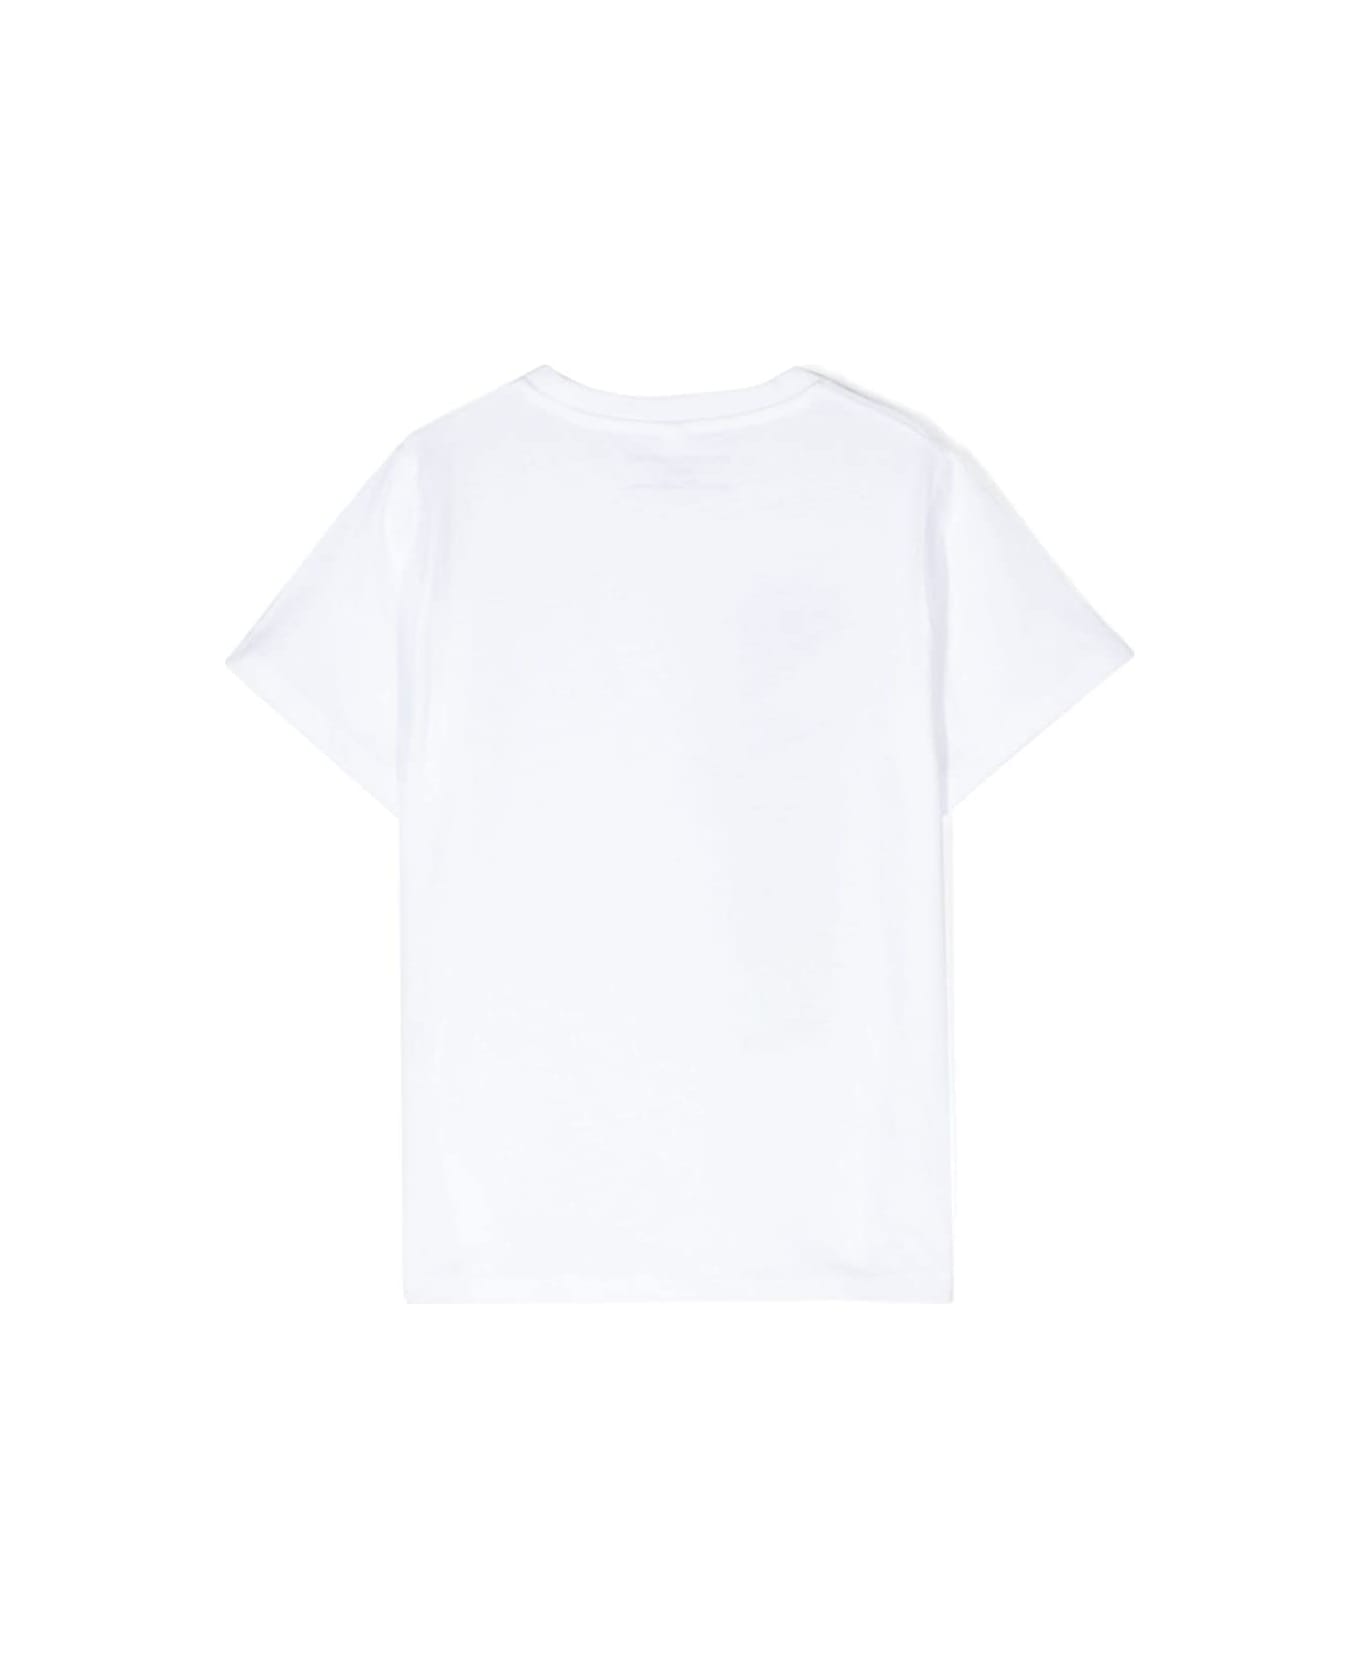 Stella McCartney Kids T-shirt With Print - White